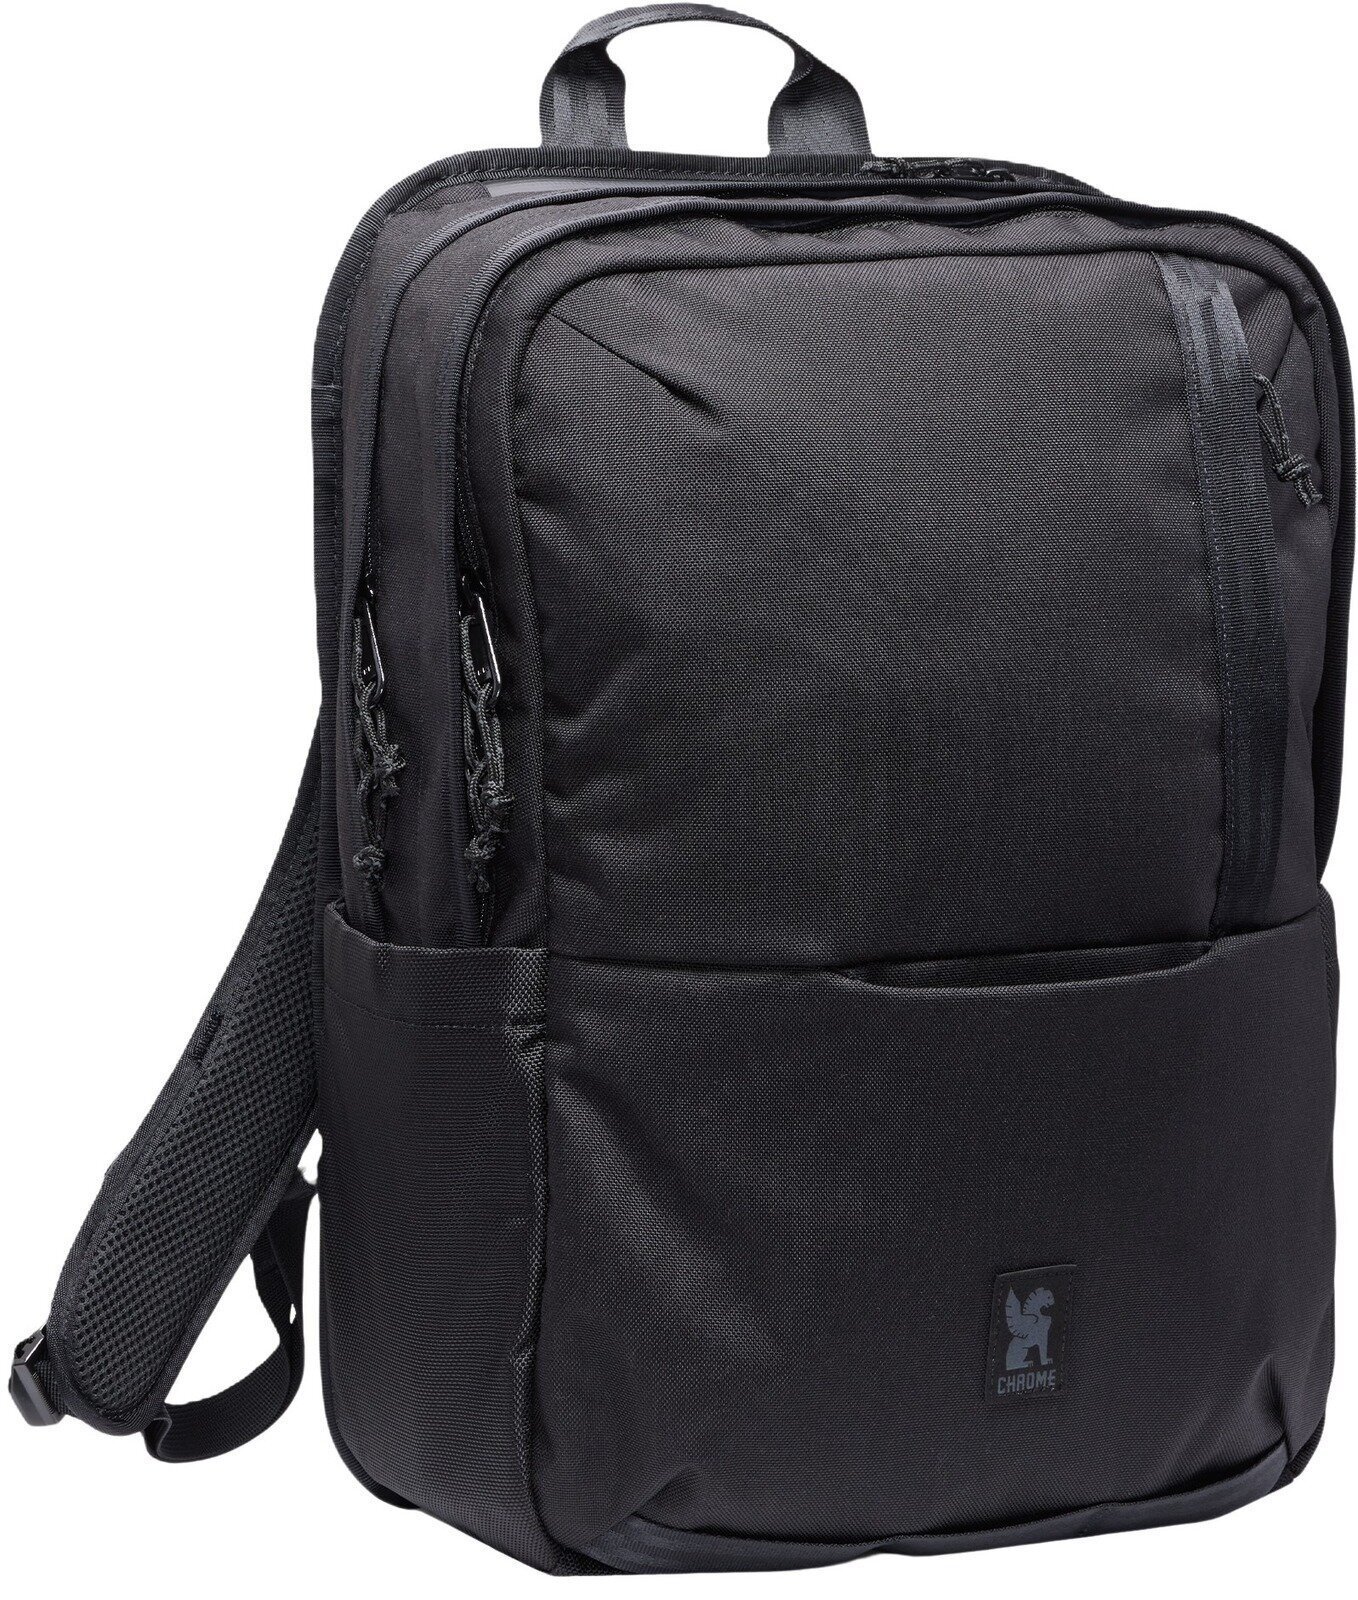 Rucsac urban / Geantă Chrome Hawes Backpack Black 26 L Rucsac